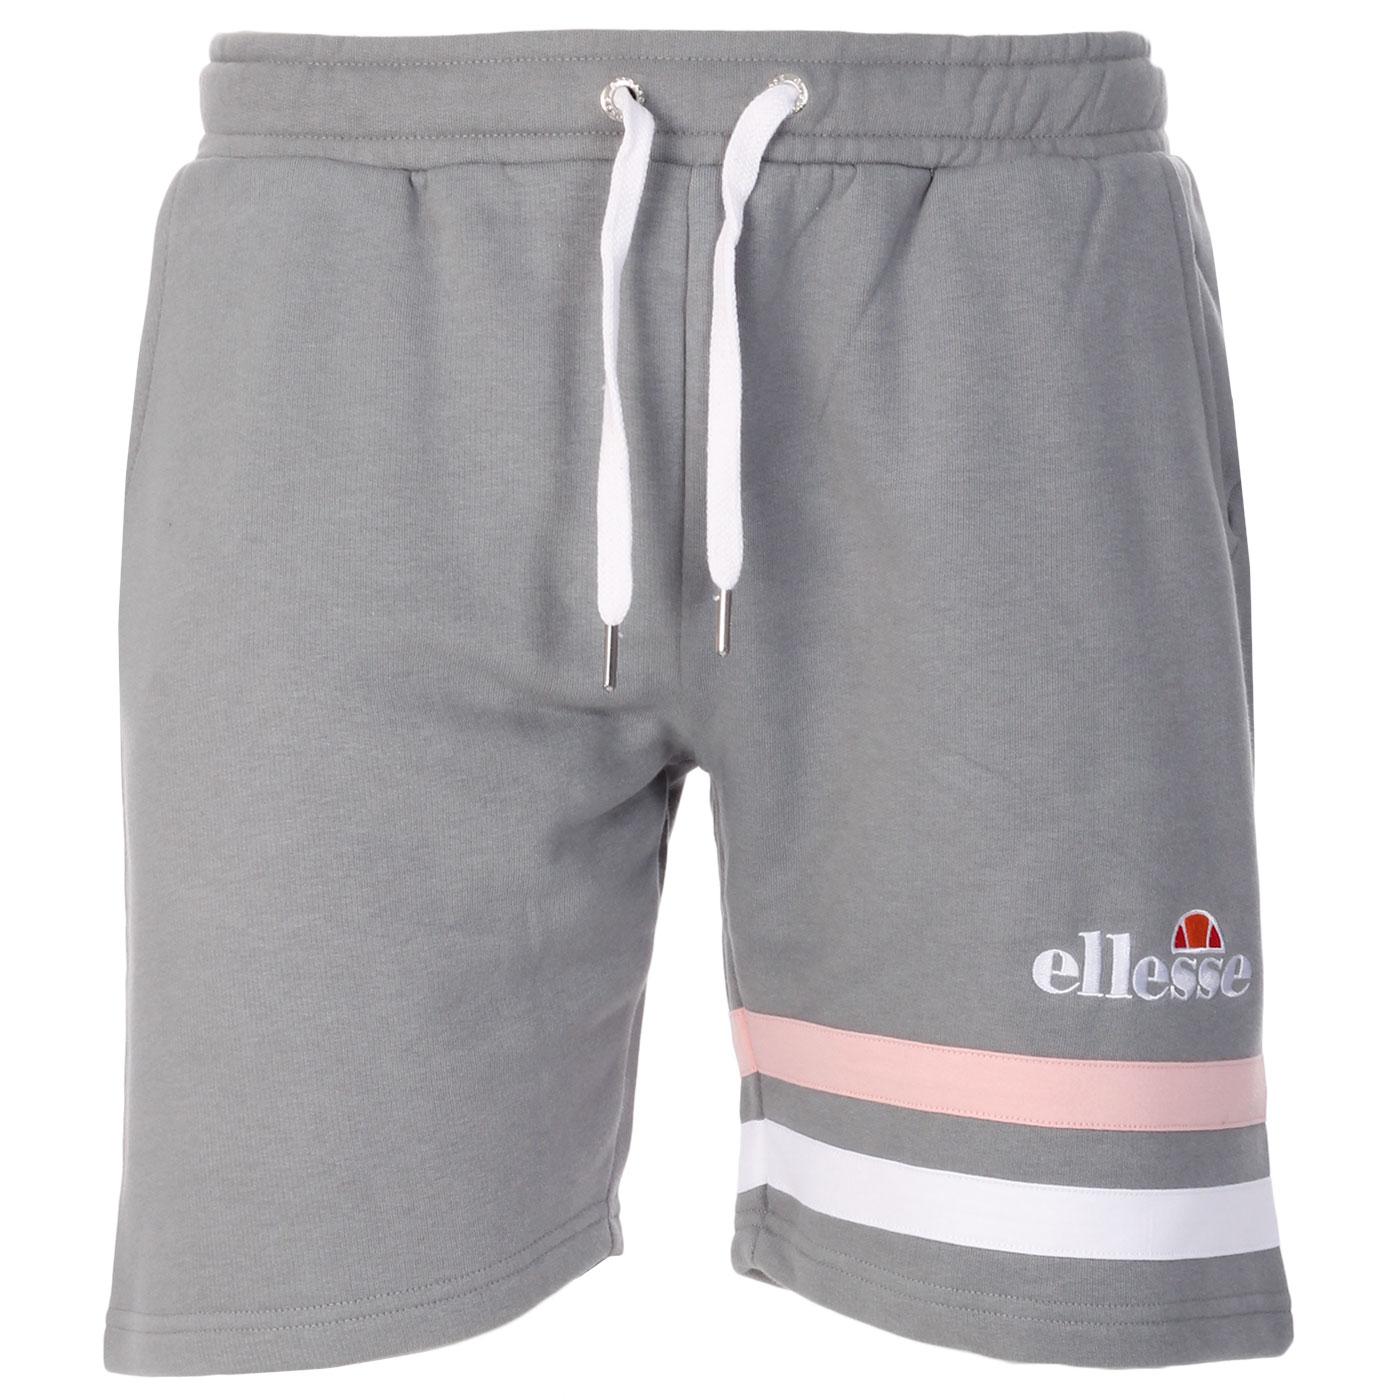 Tognazza ELLESSE Retro 90s Stripe Shorts (Grey)